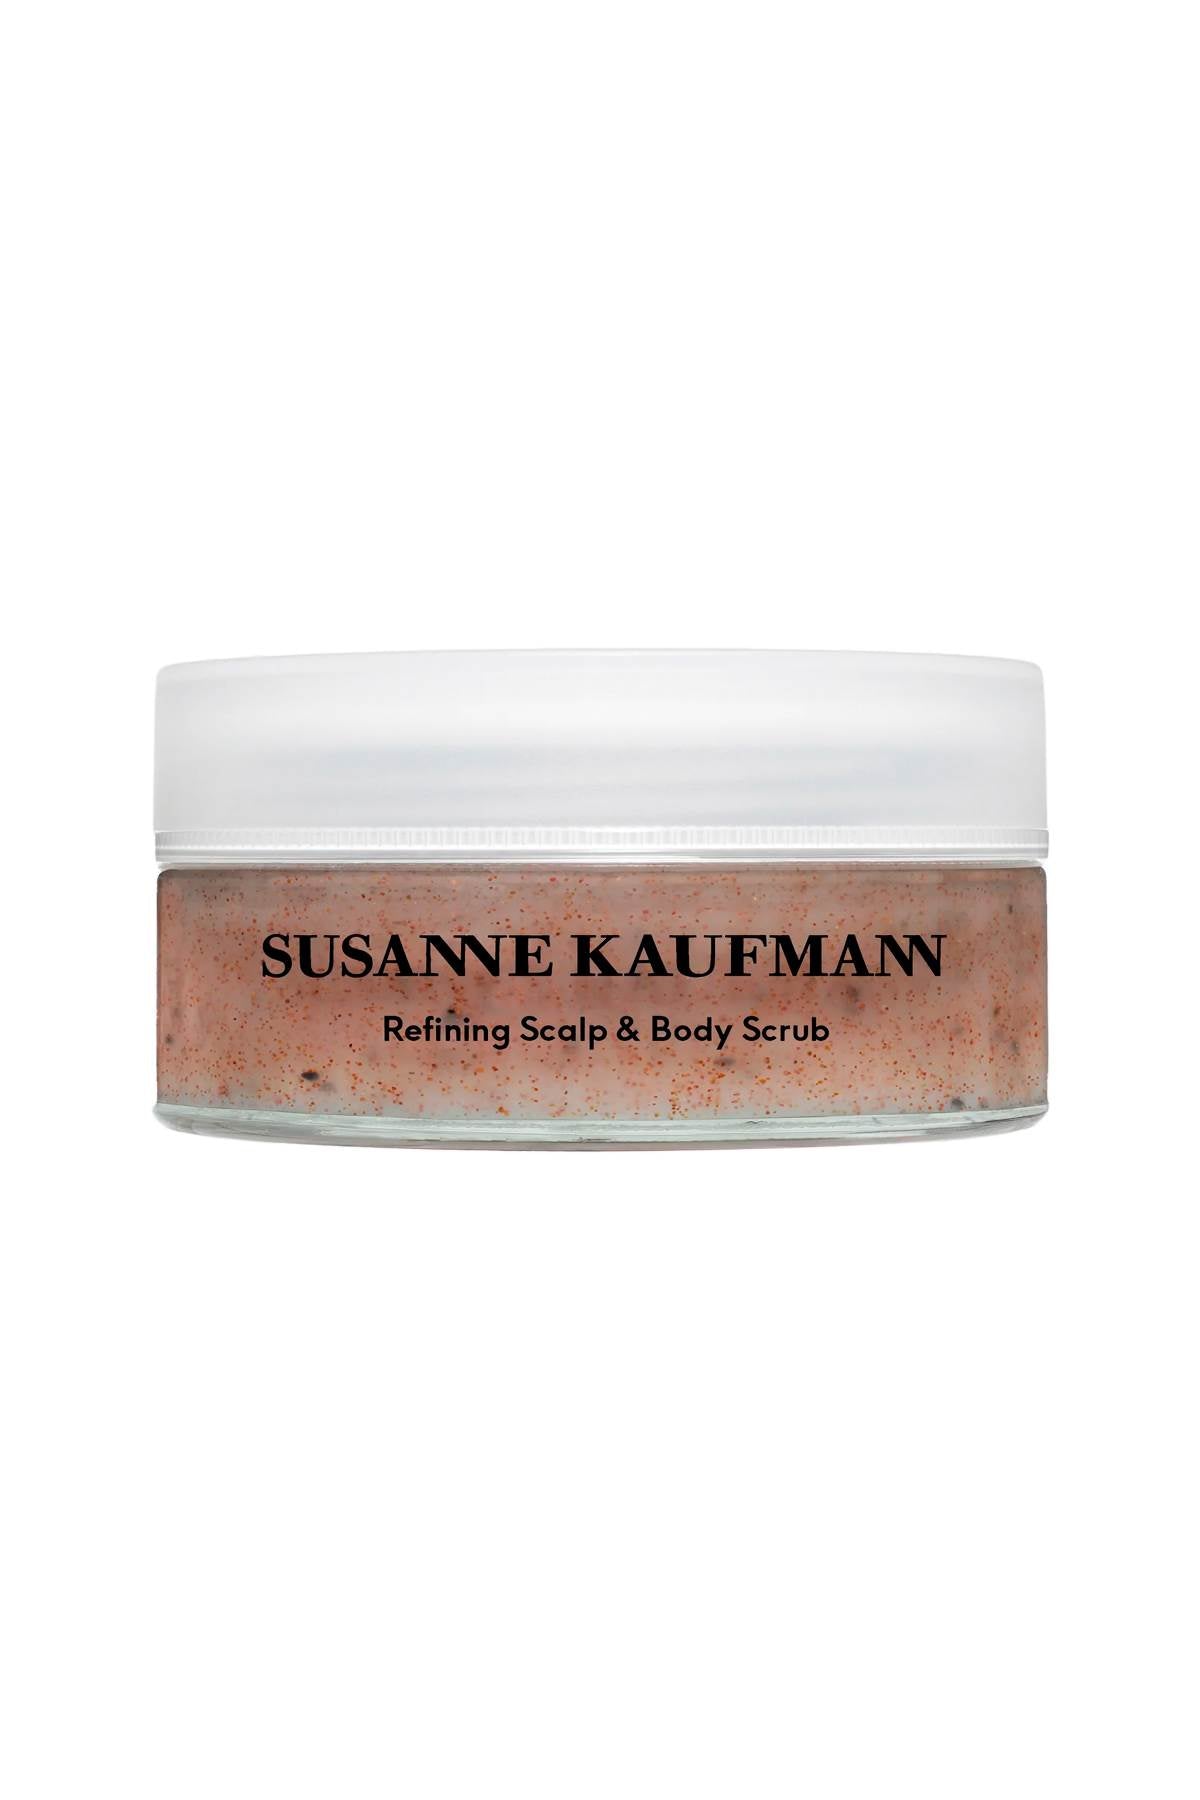 Susanne kaufmann refining scalp & body scrub - 200 ml-0